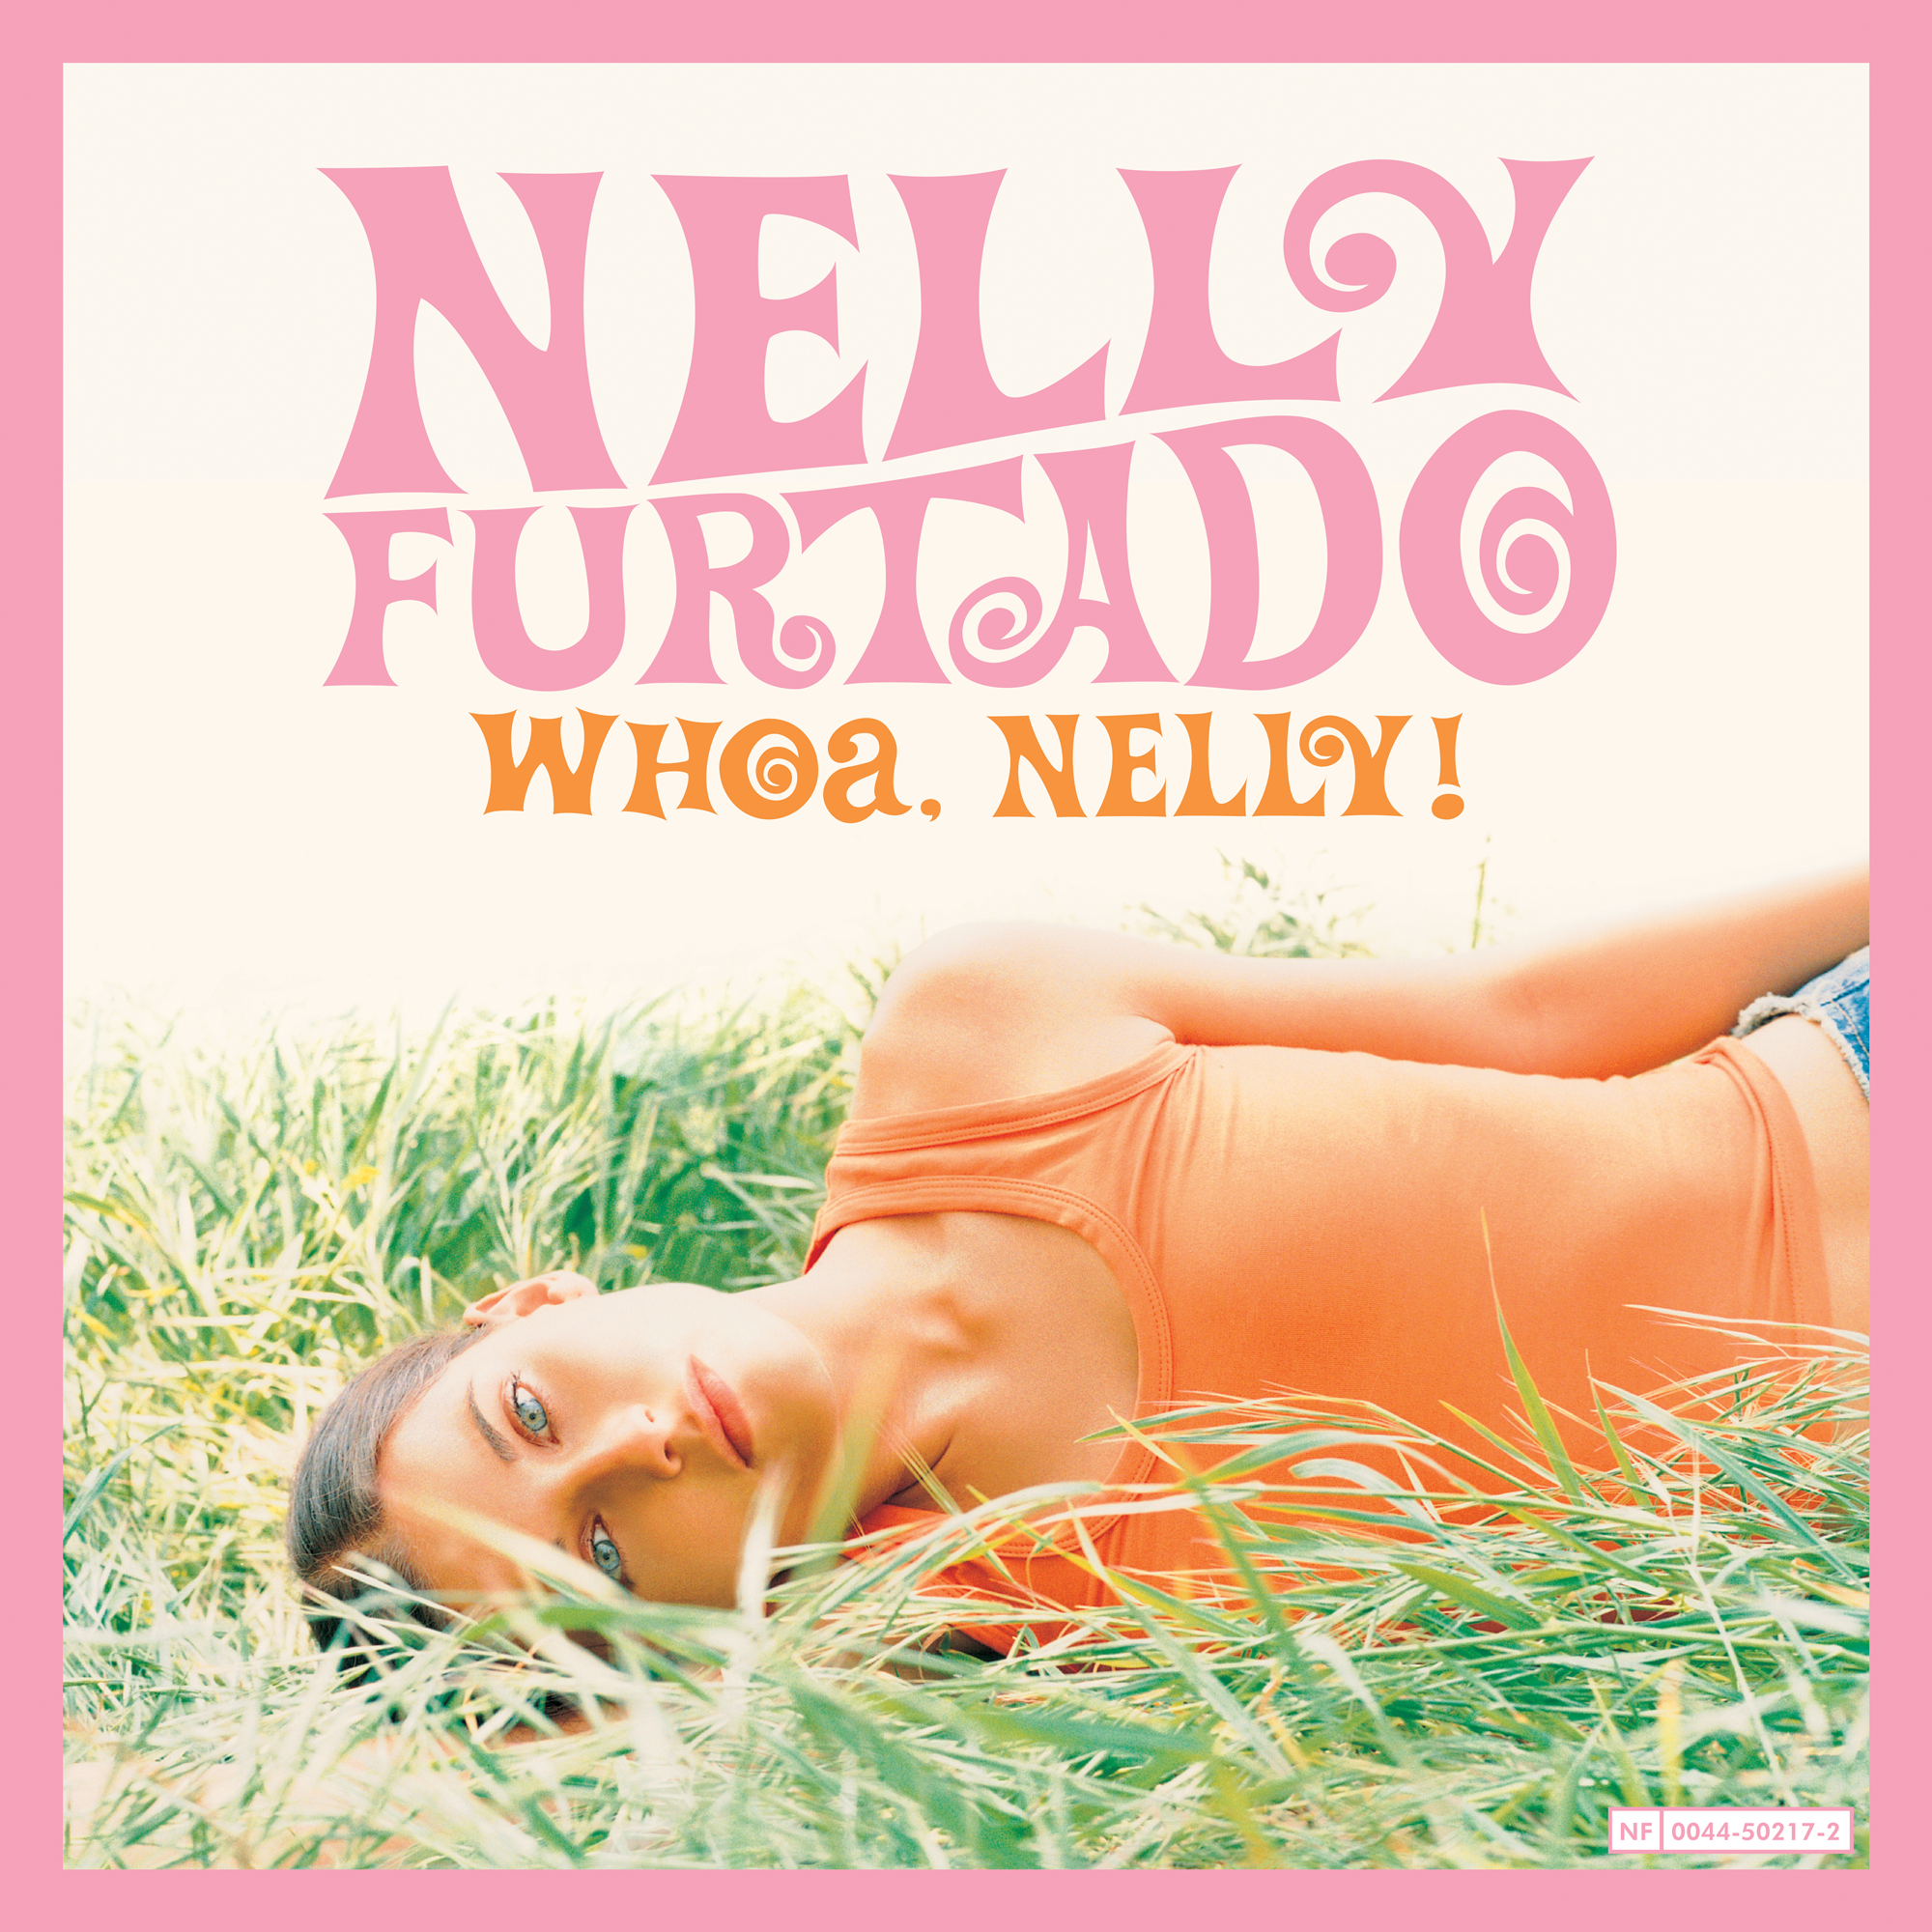 Nelly Furtado - Whoa, Nelly! Limited 'Cotton Candy & Orange Peel' Vinyl 2LP